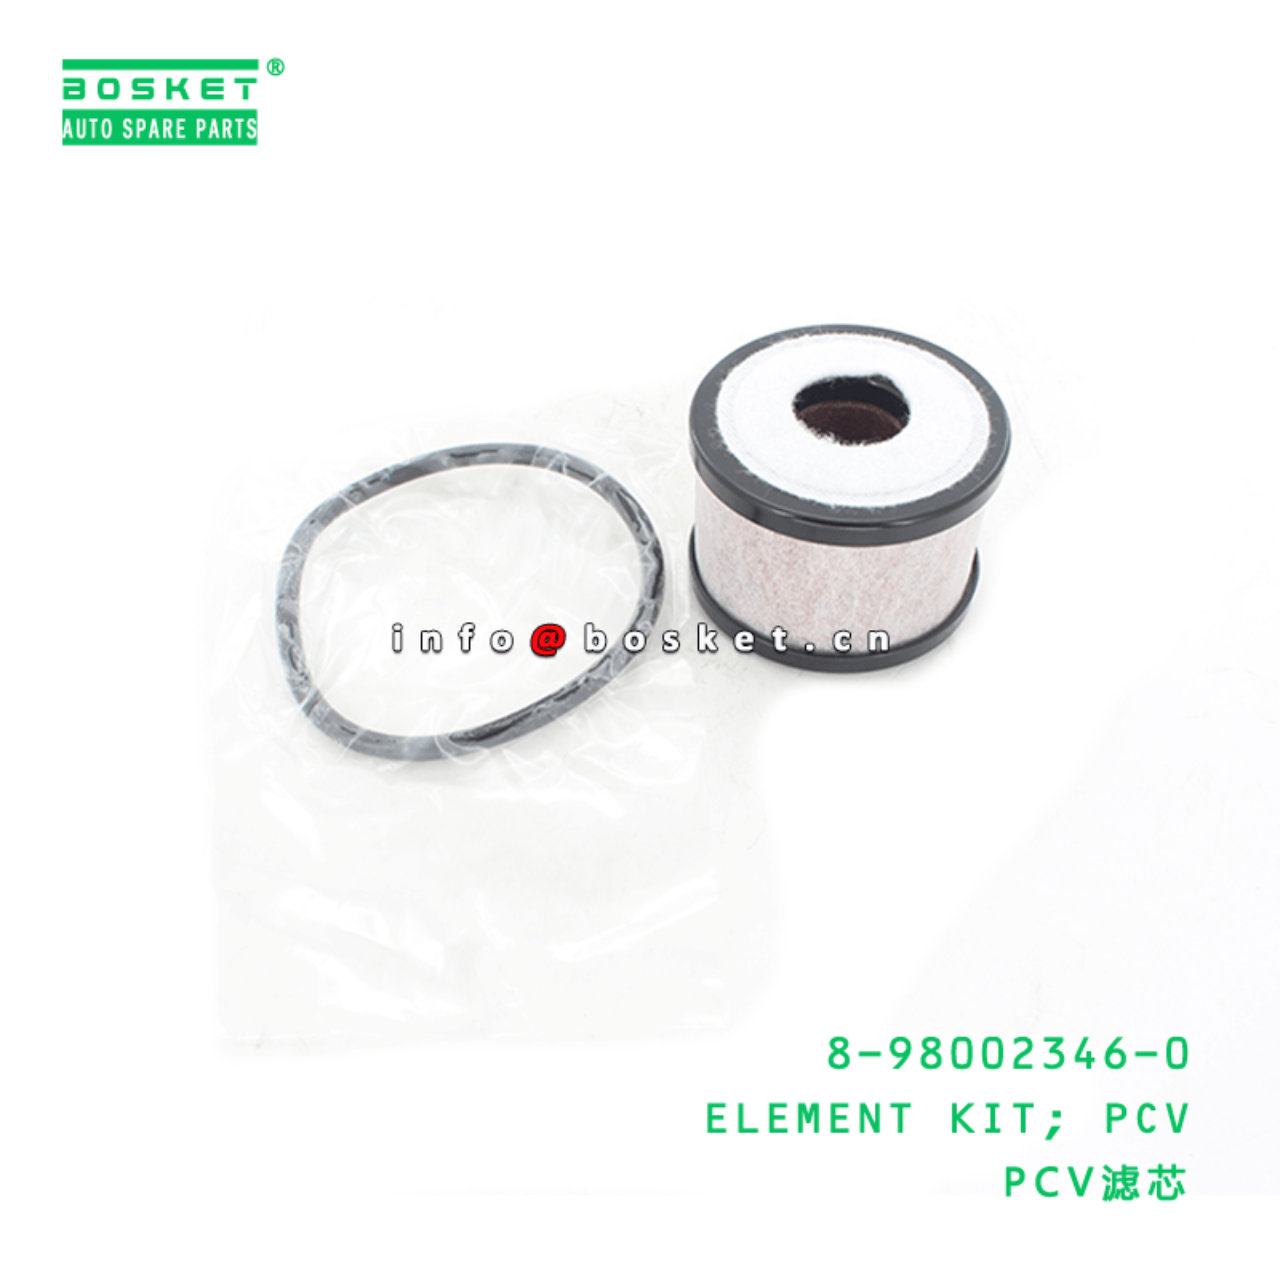 8-98002346-0 Positive Crankcase Ventilation Element Kit 8980023460